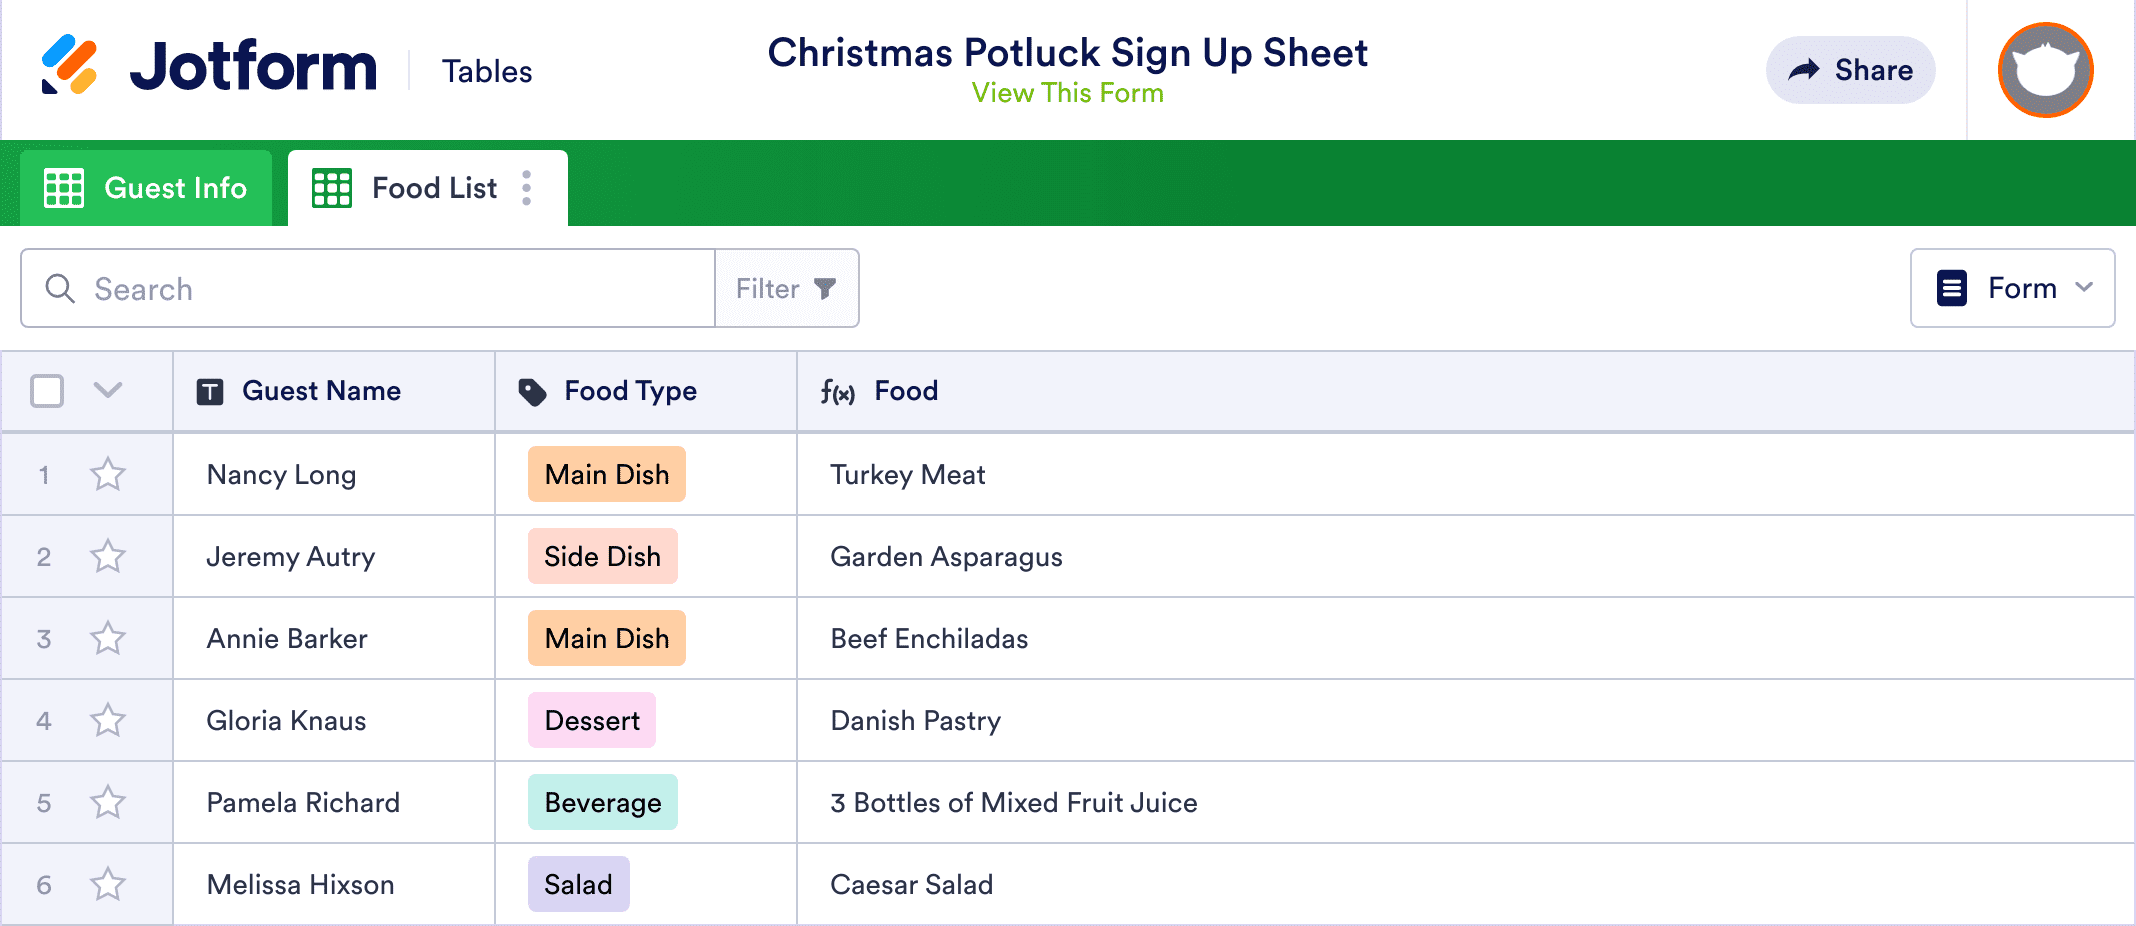 Christmas Potluck Sign Up Sheet Template | Jotform Tables